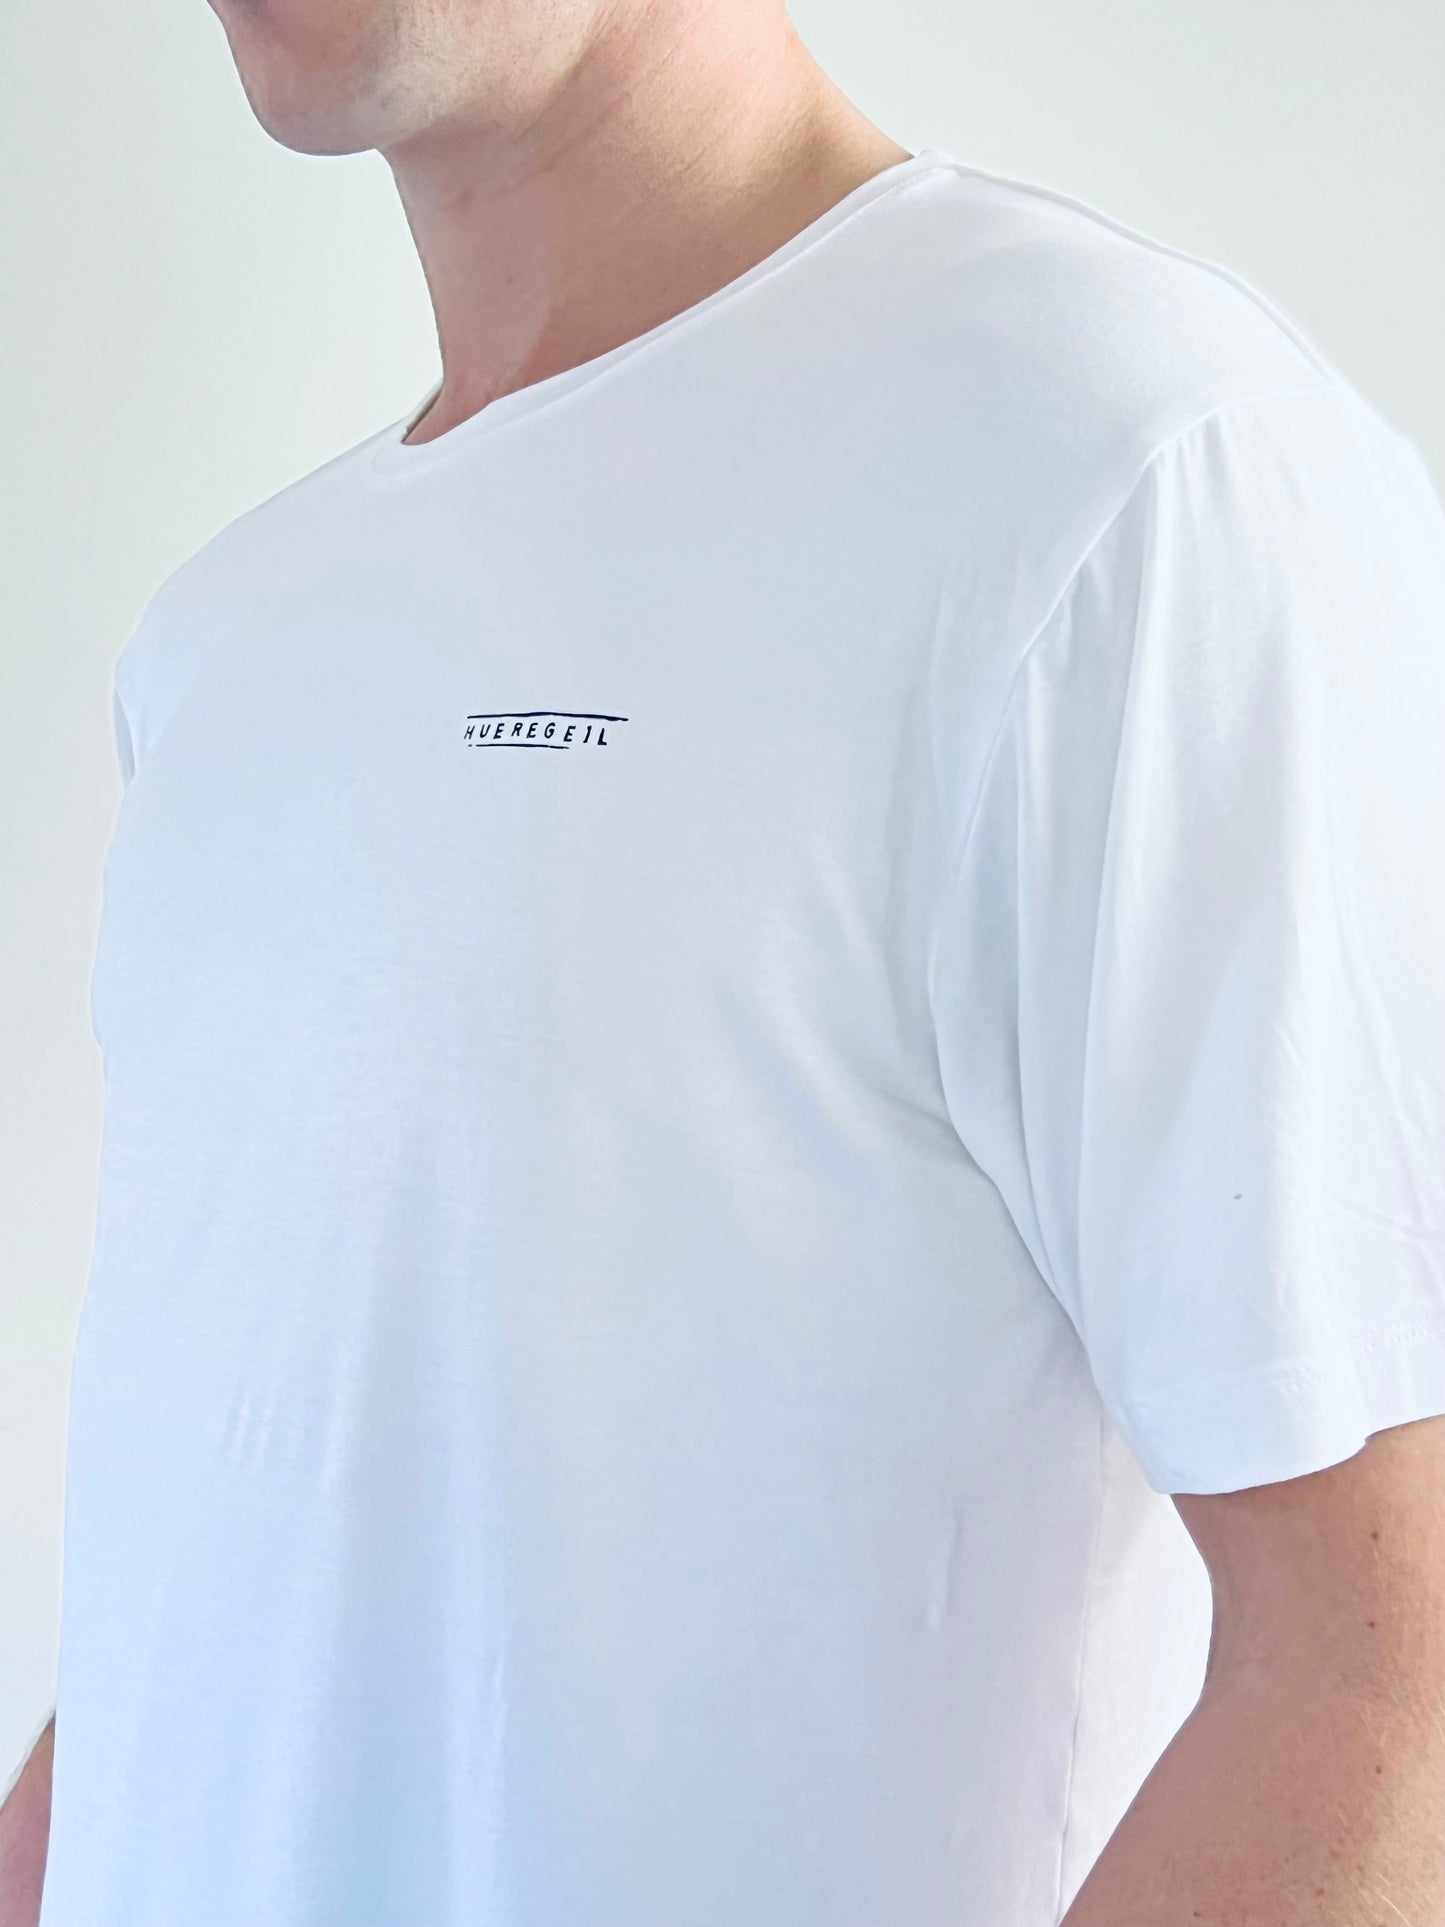 SALE because of new white fabric soon / Super thin!! T-Shirt white w/ mini print